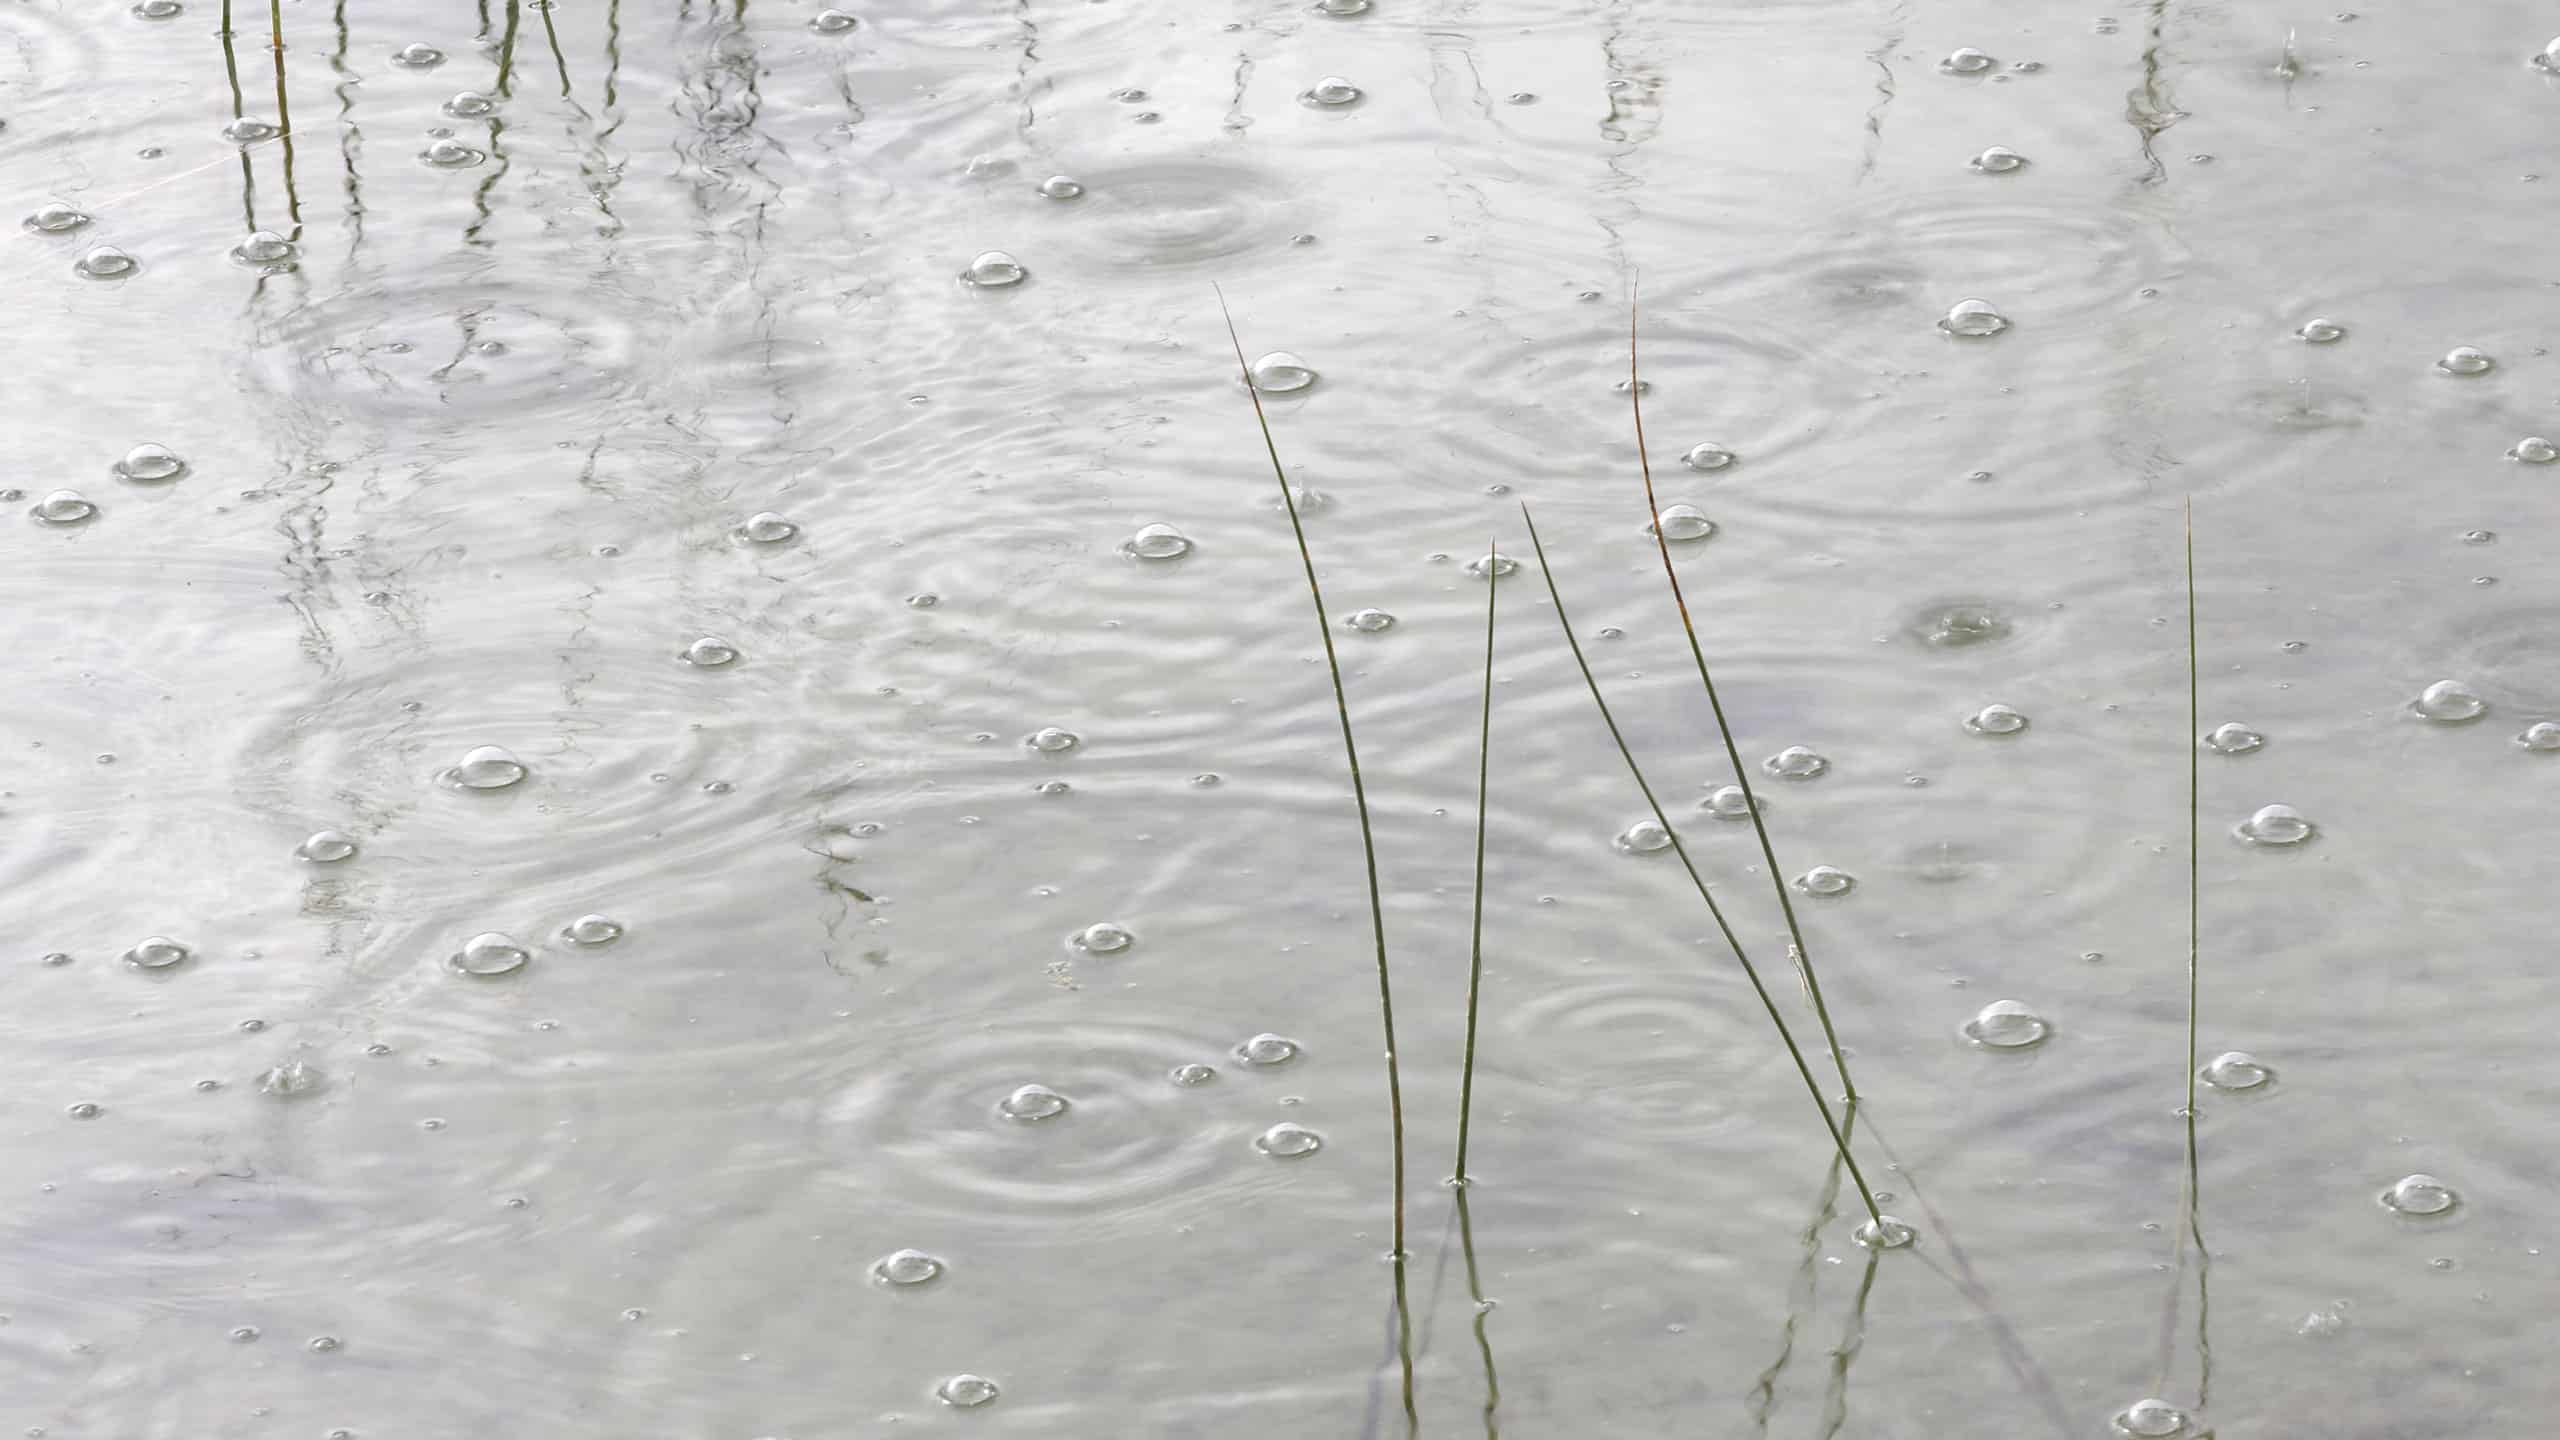 raindrops on water